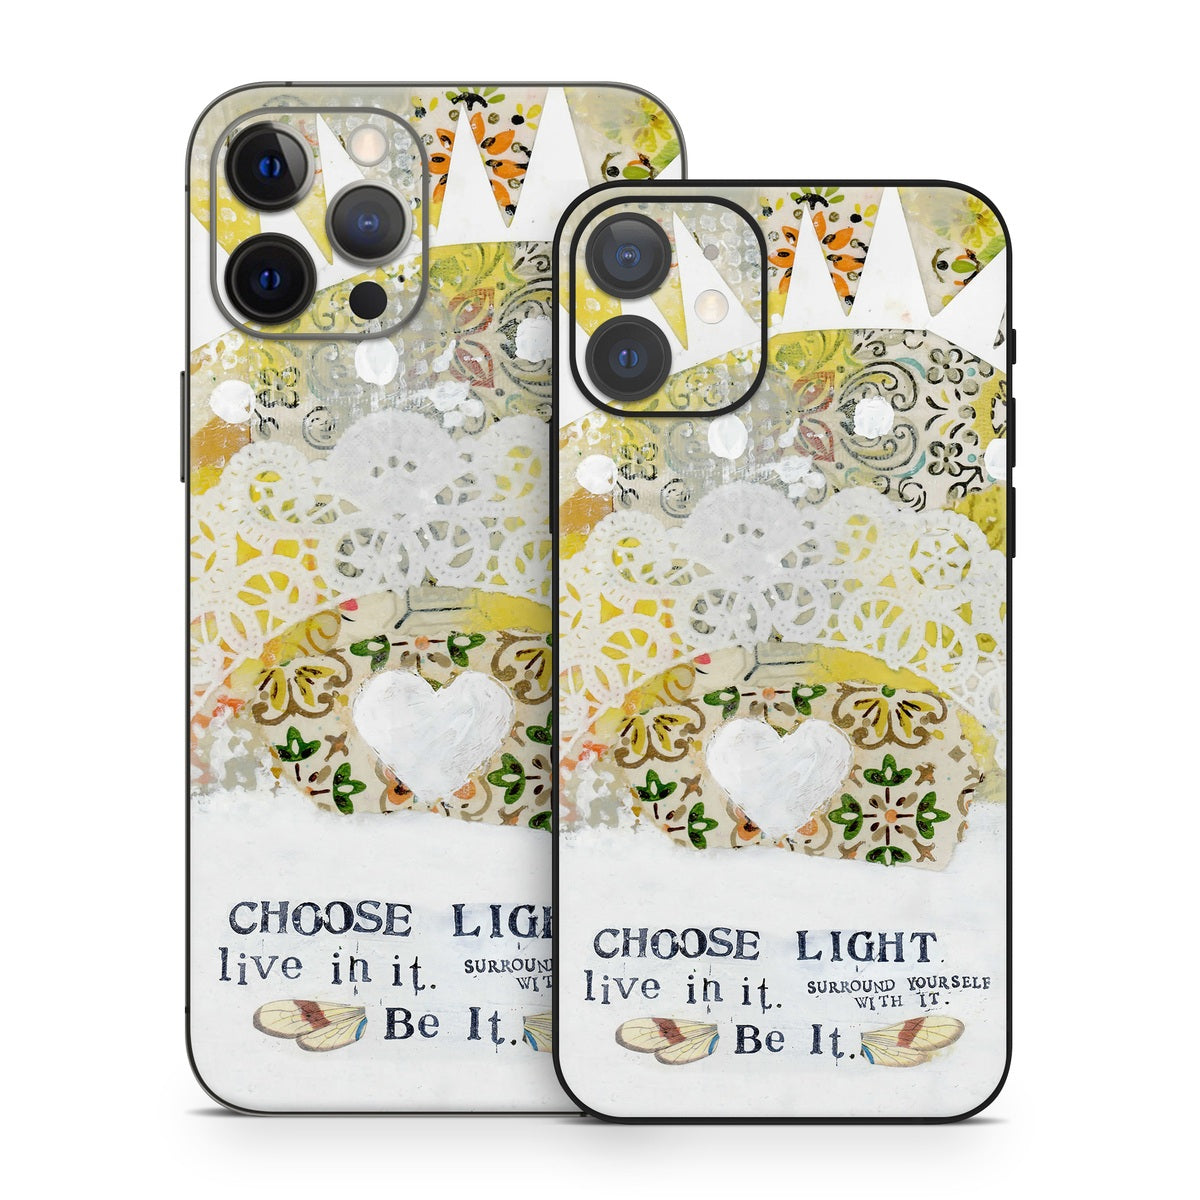 Choose Light - Apple iPhone 12 Skin